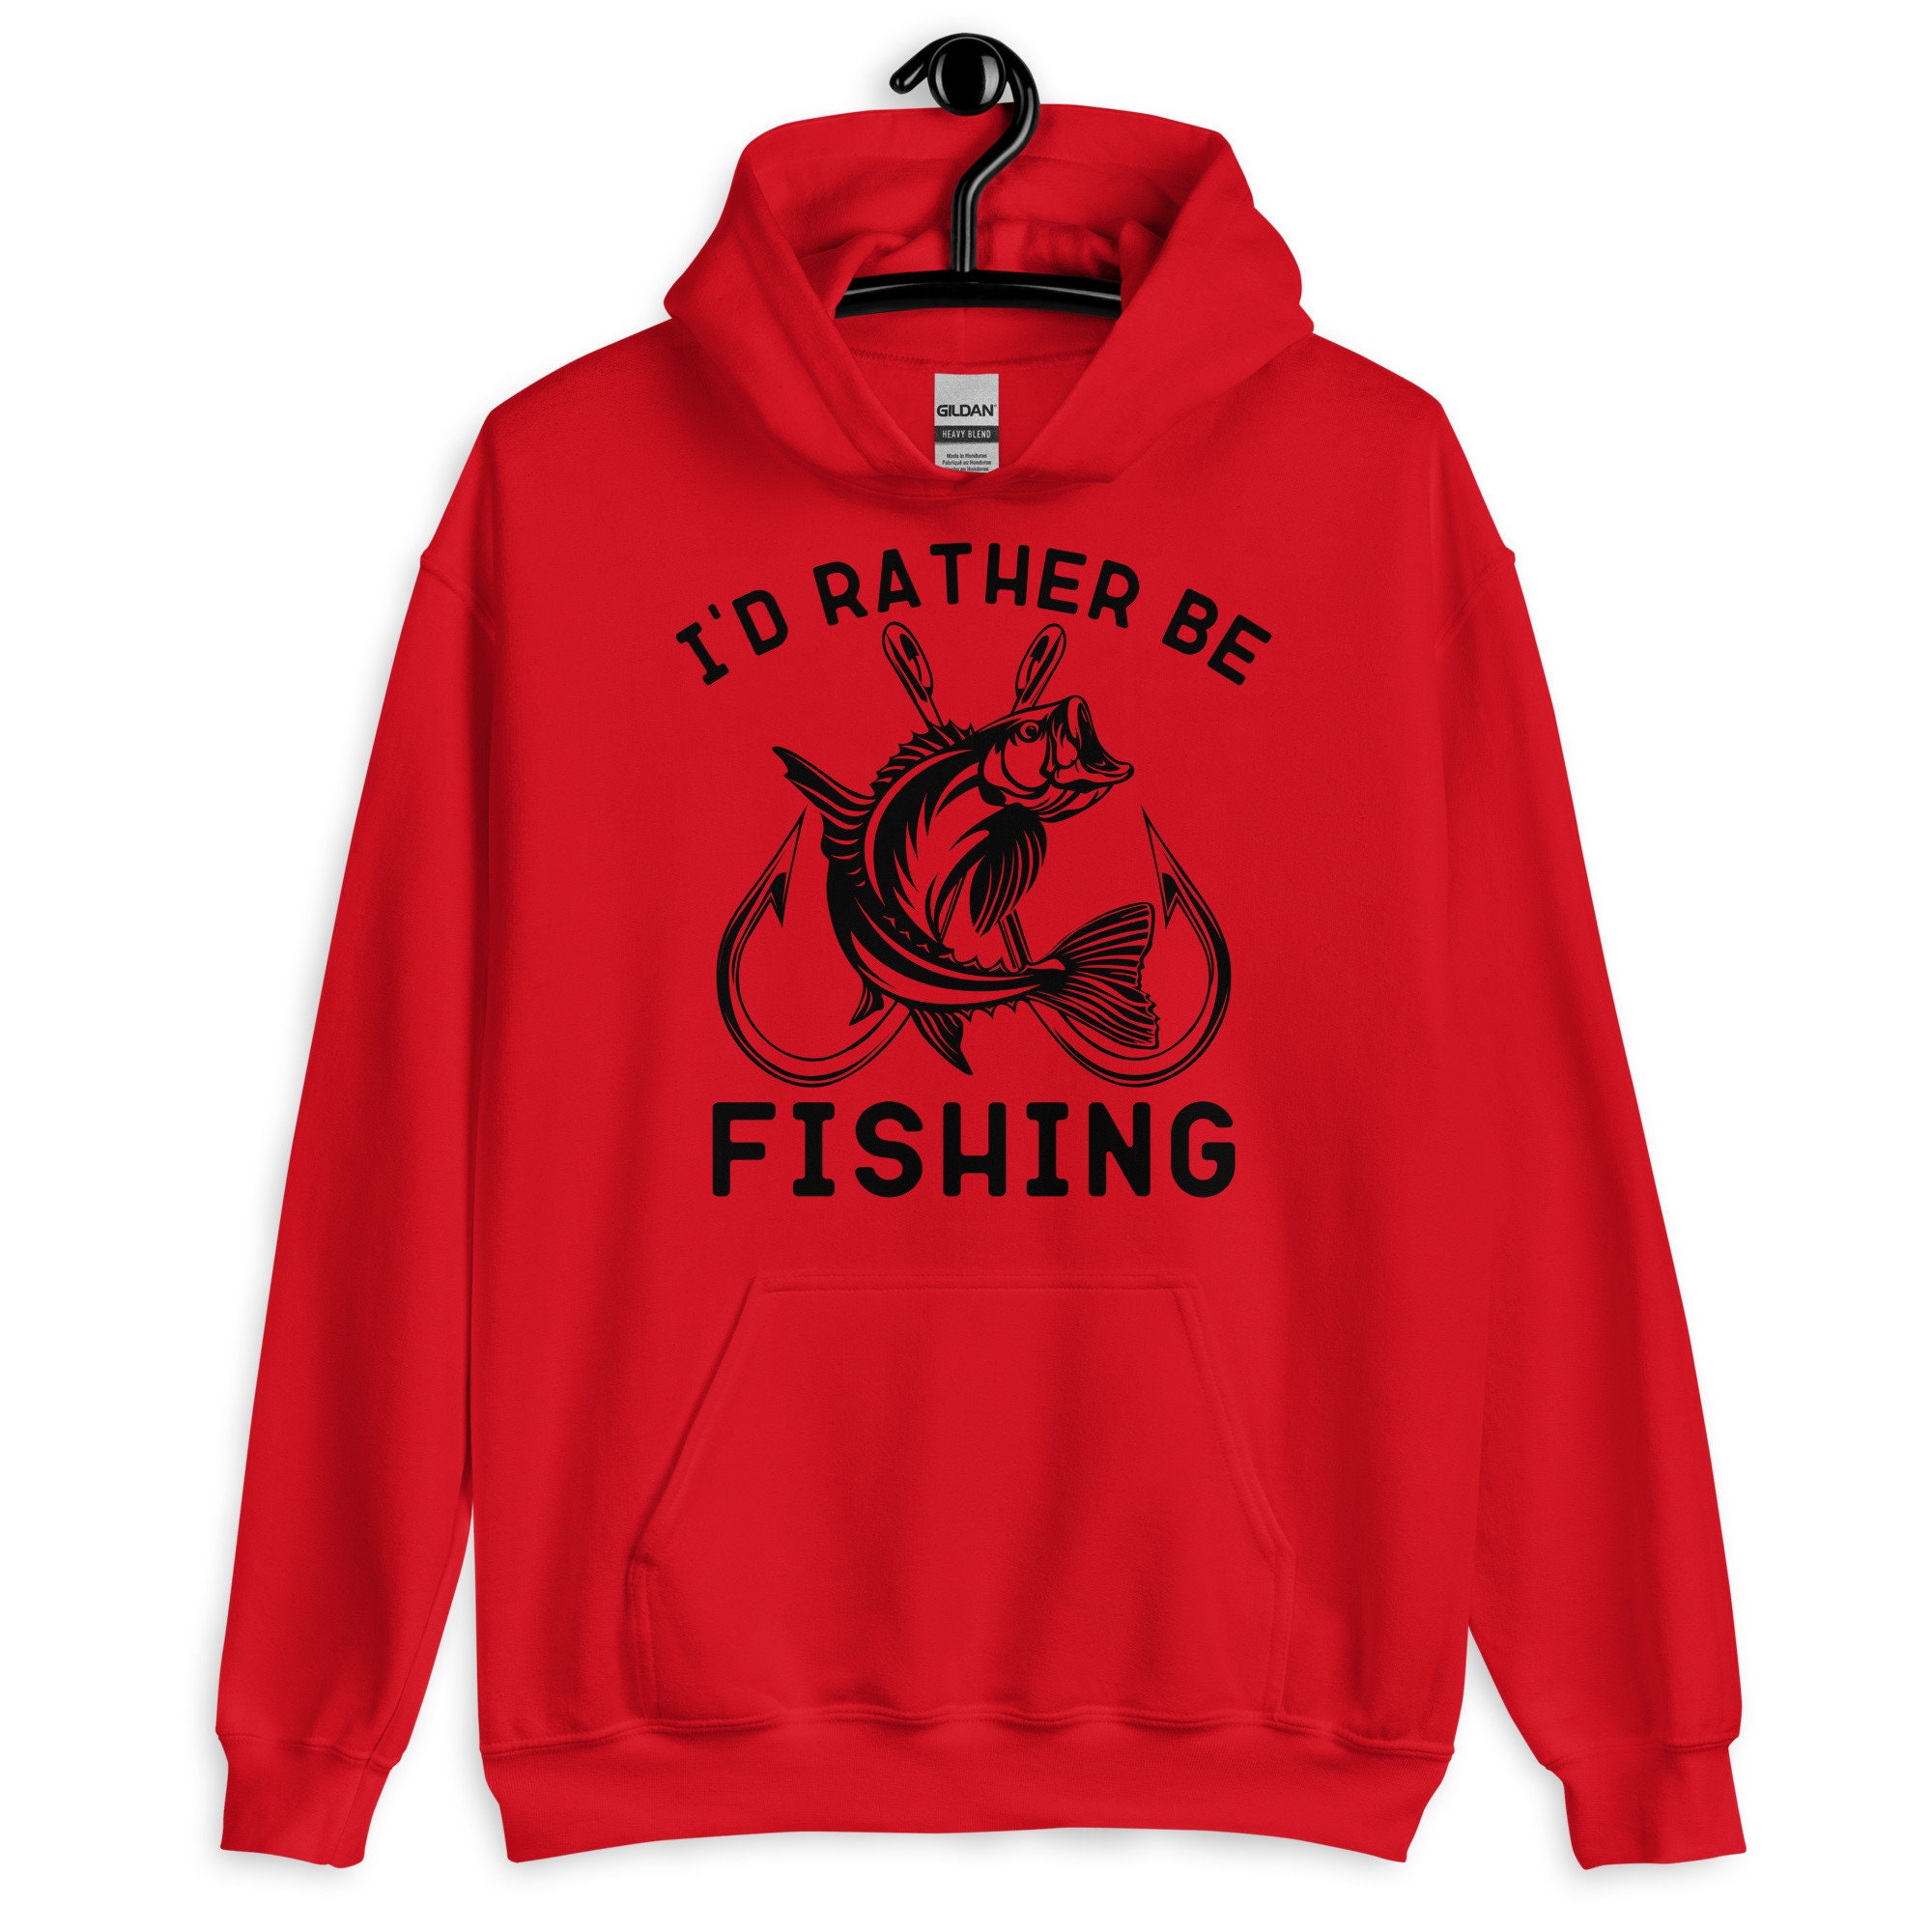 Fishing Hoodie, I'd Rather Be Fishing Hoodie, Fisherman Hoodie, Gift for Fishing Man, Gift for Fishing Lovers